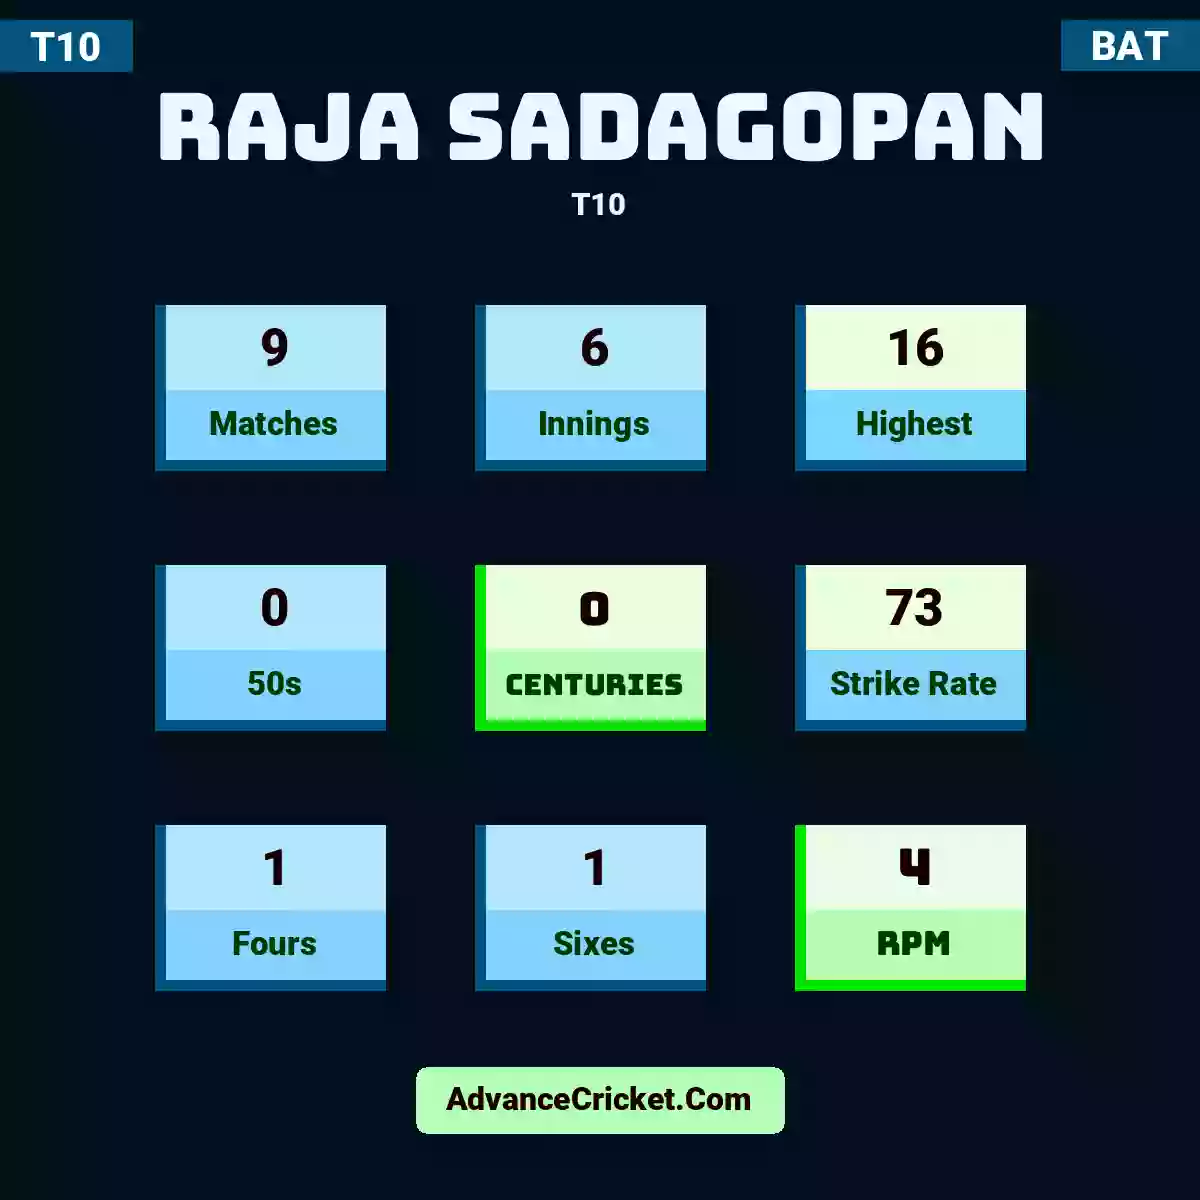 Raja Sadagopan T10 , Raja Sadagopan played 9 matches, scored 16 runs as highest, 0 half-centuries, and 0 centuries, with a strike rate of 73. R.Sadagopan hit 1 fours and 1 sixes, with an RPM of 4.